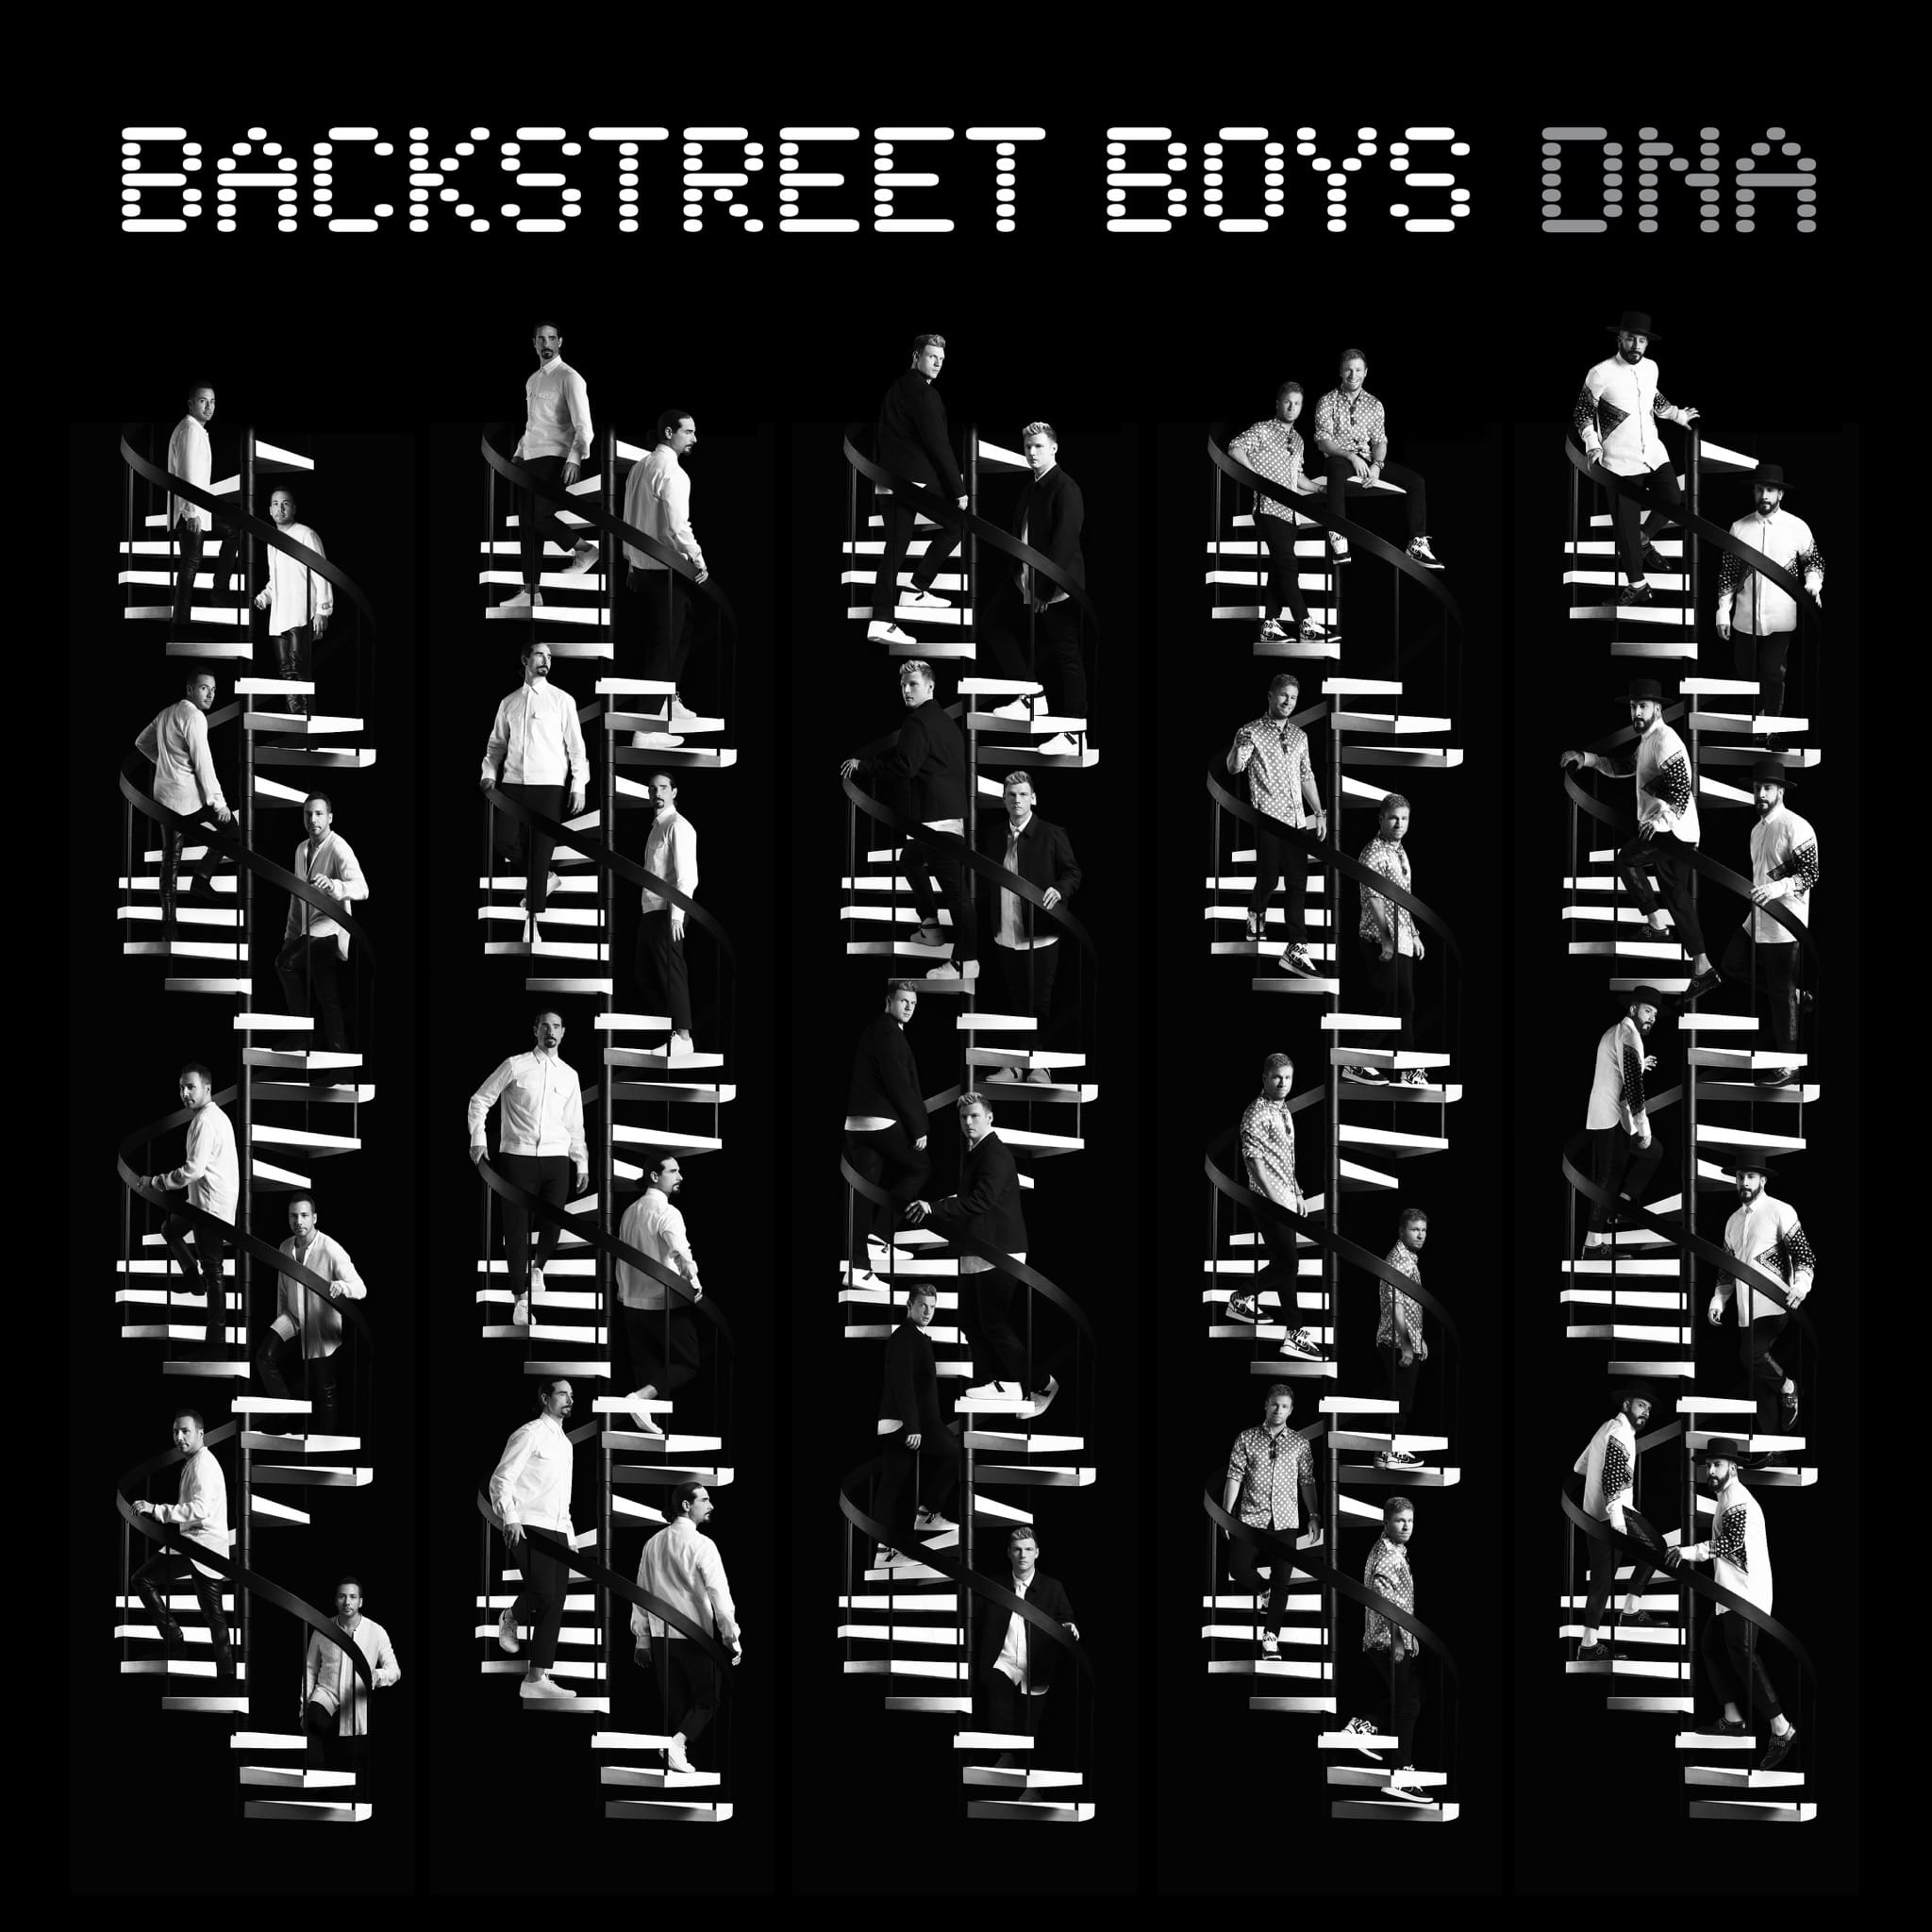 Backstreet Boys image pochette cover album DNA musique